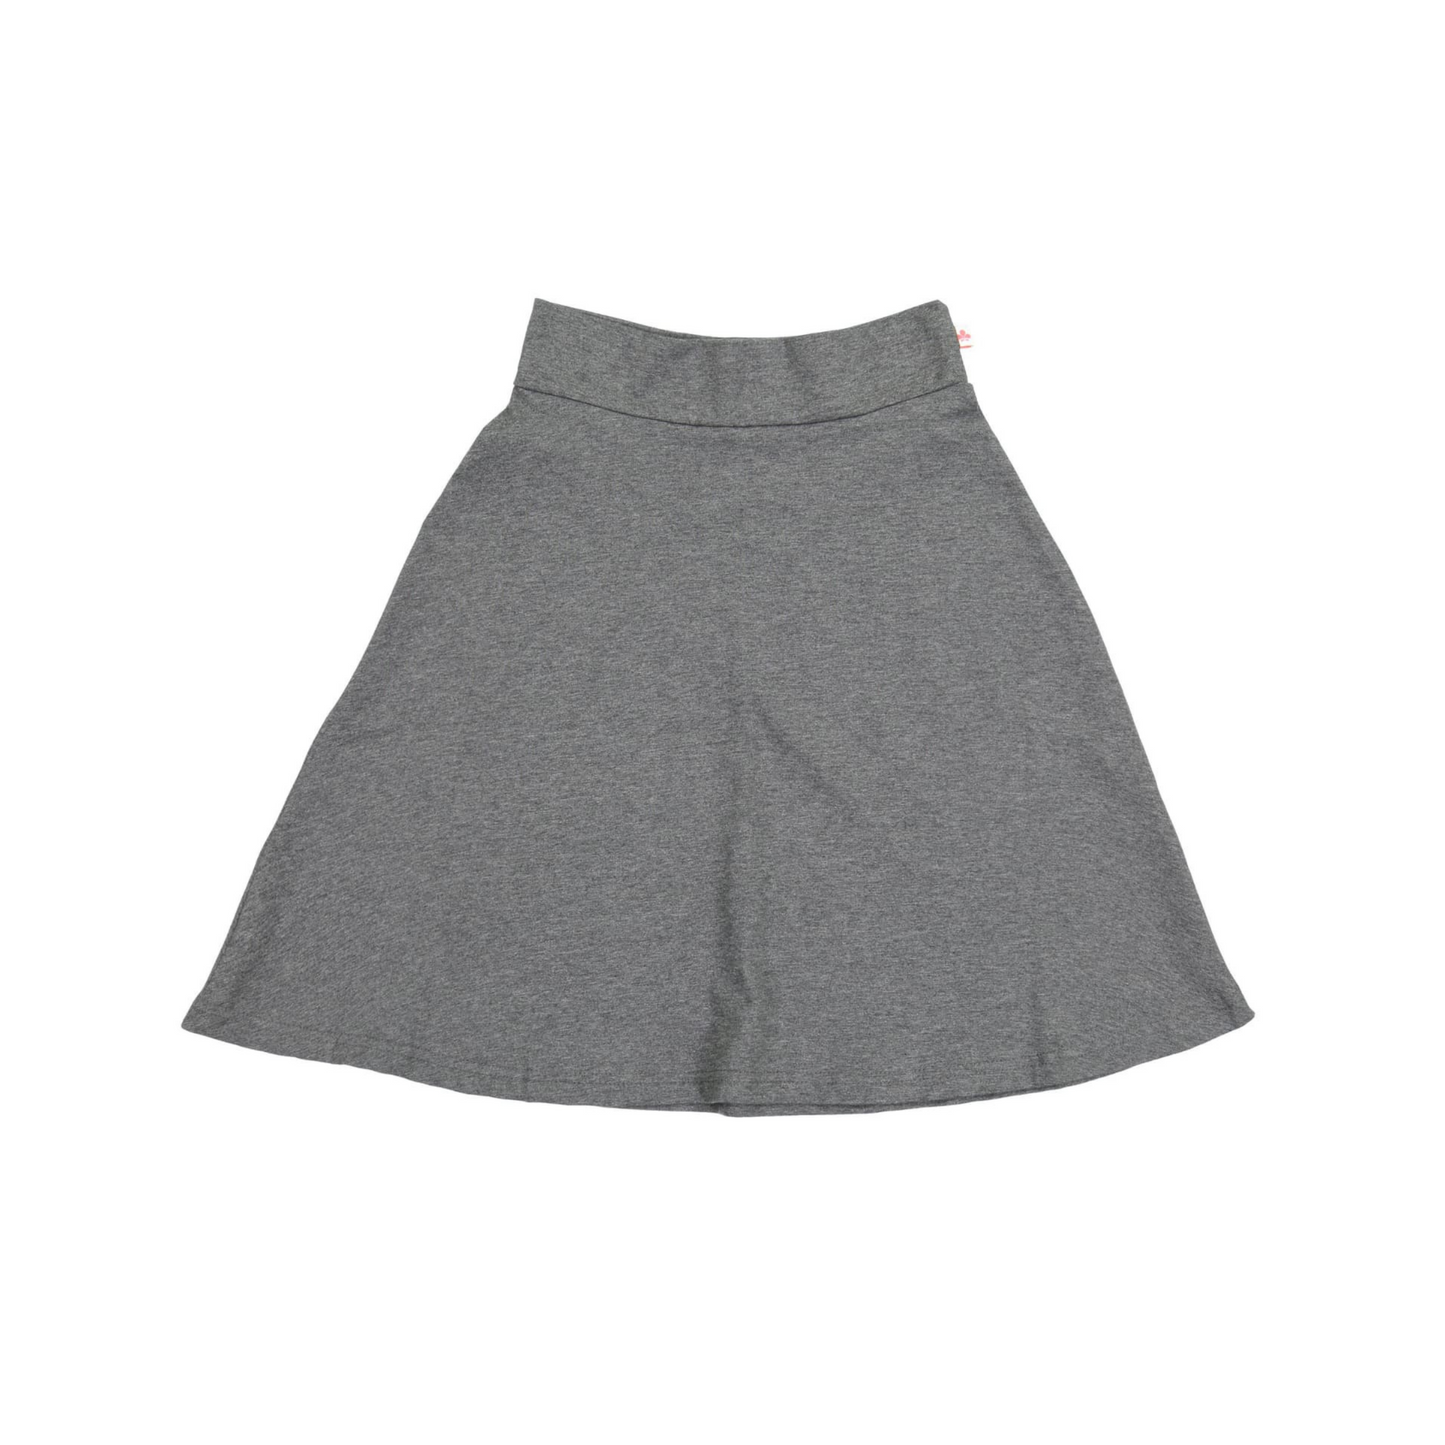 Camp Skirt Classic- Charcoal